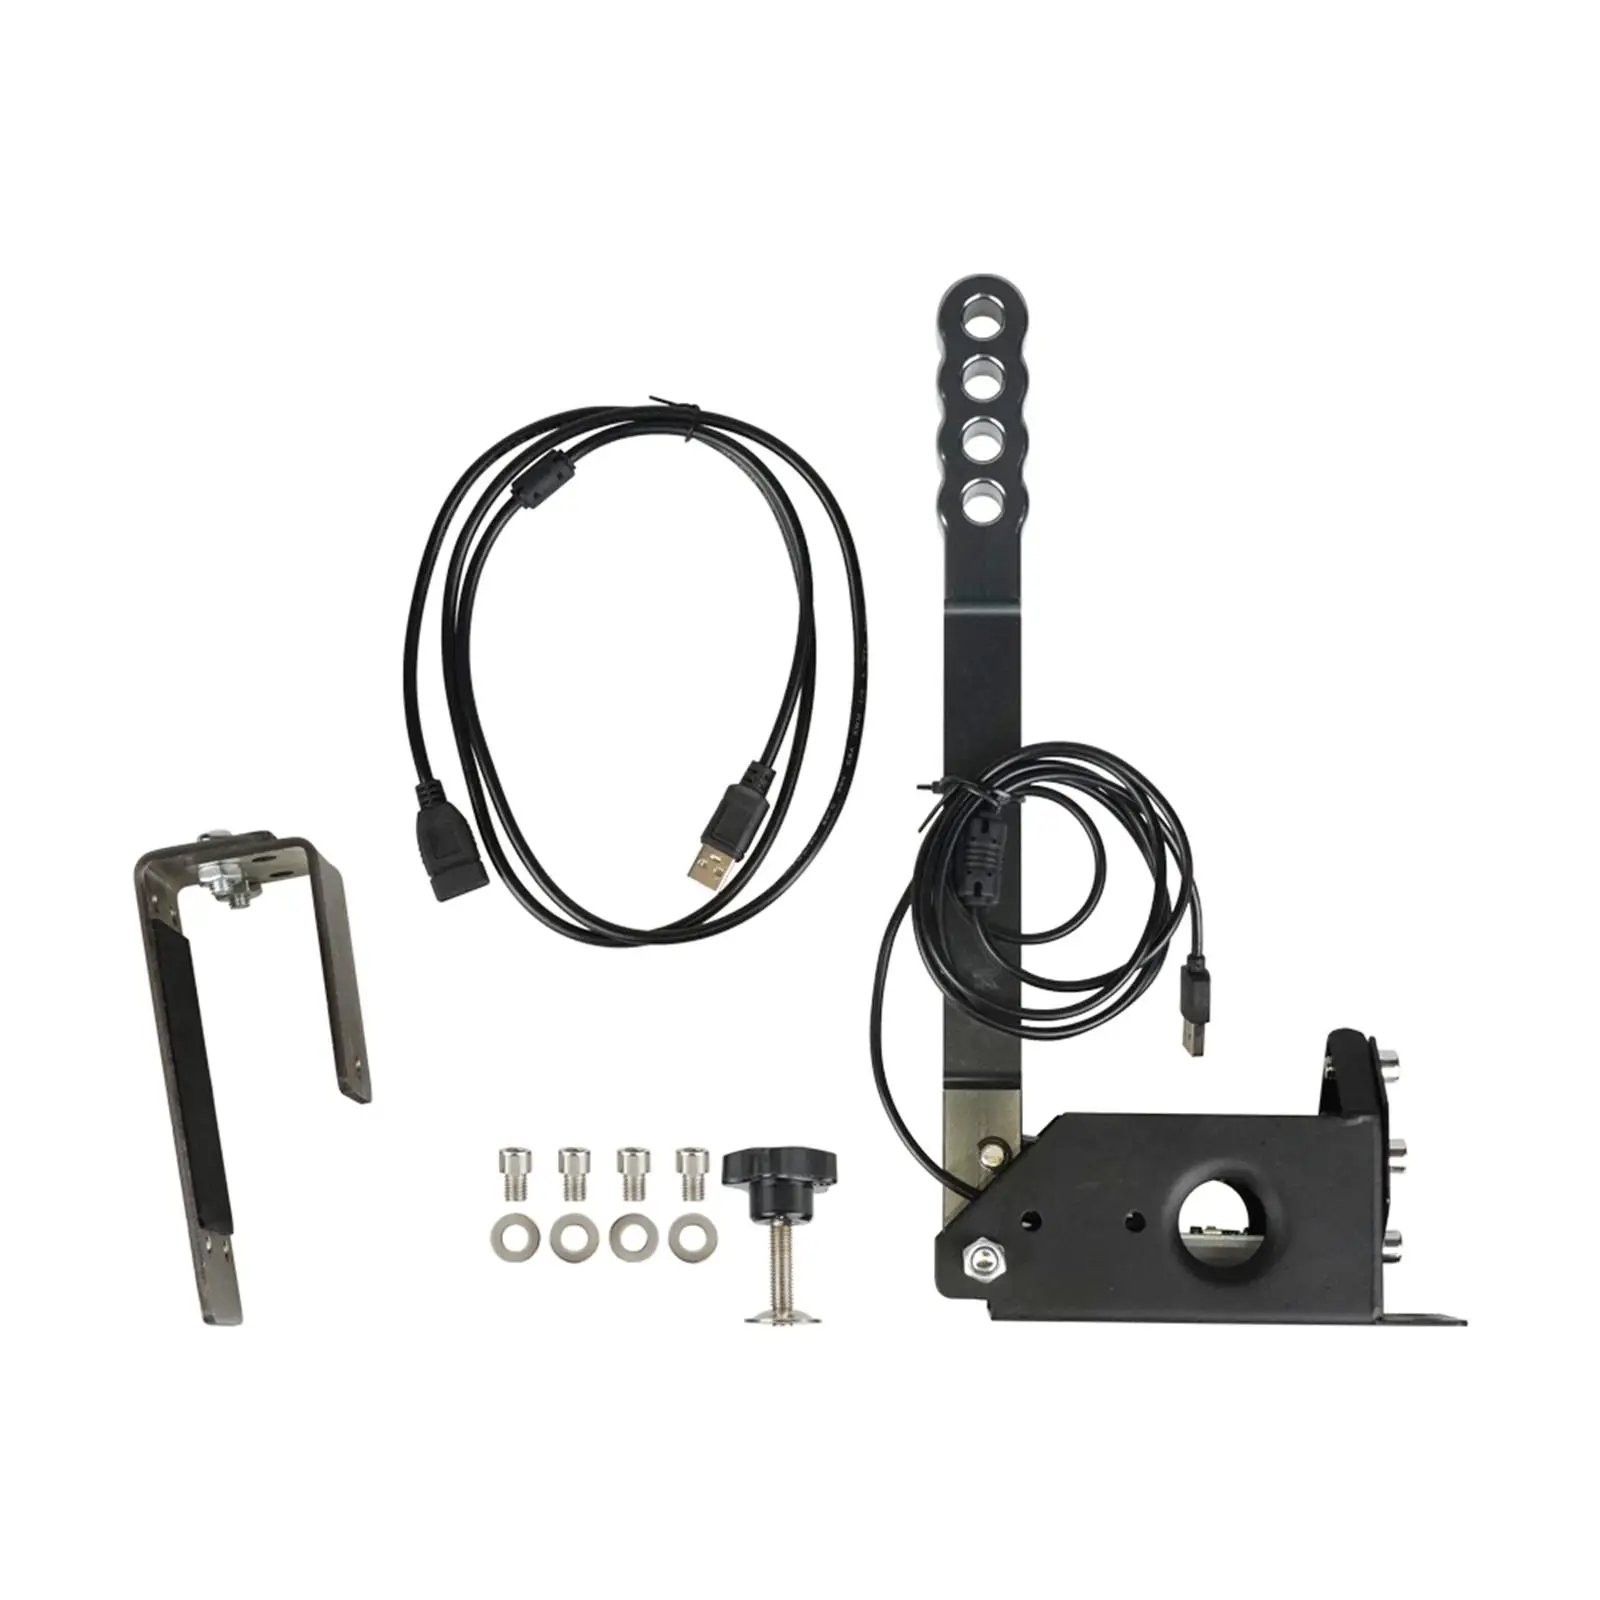 Handbrake Durable USB Anti Wear Plug and Play 14 Bit Spare Parts Handbrake Clamp for Logitech G29 Racing Games G27 G25 PC